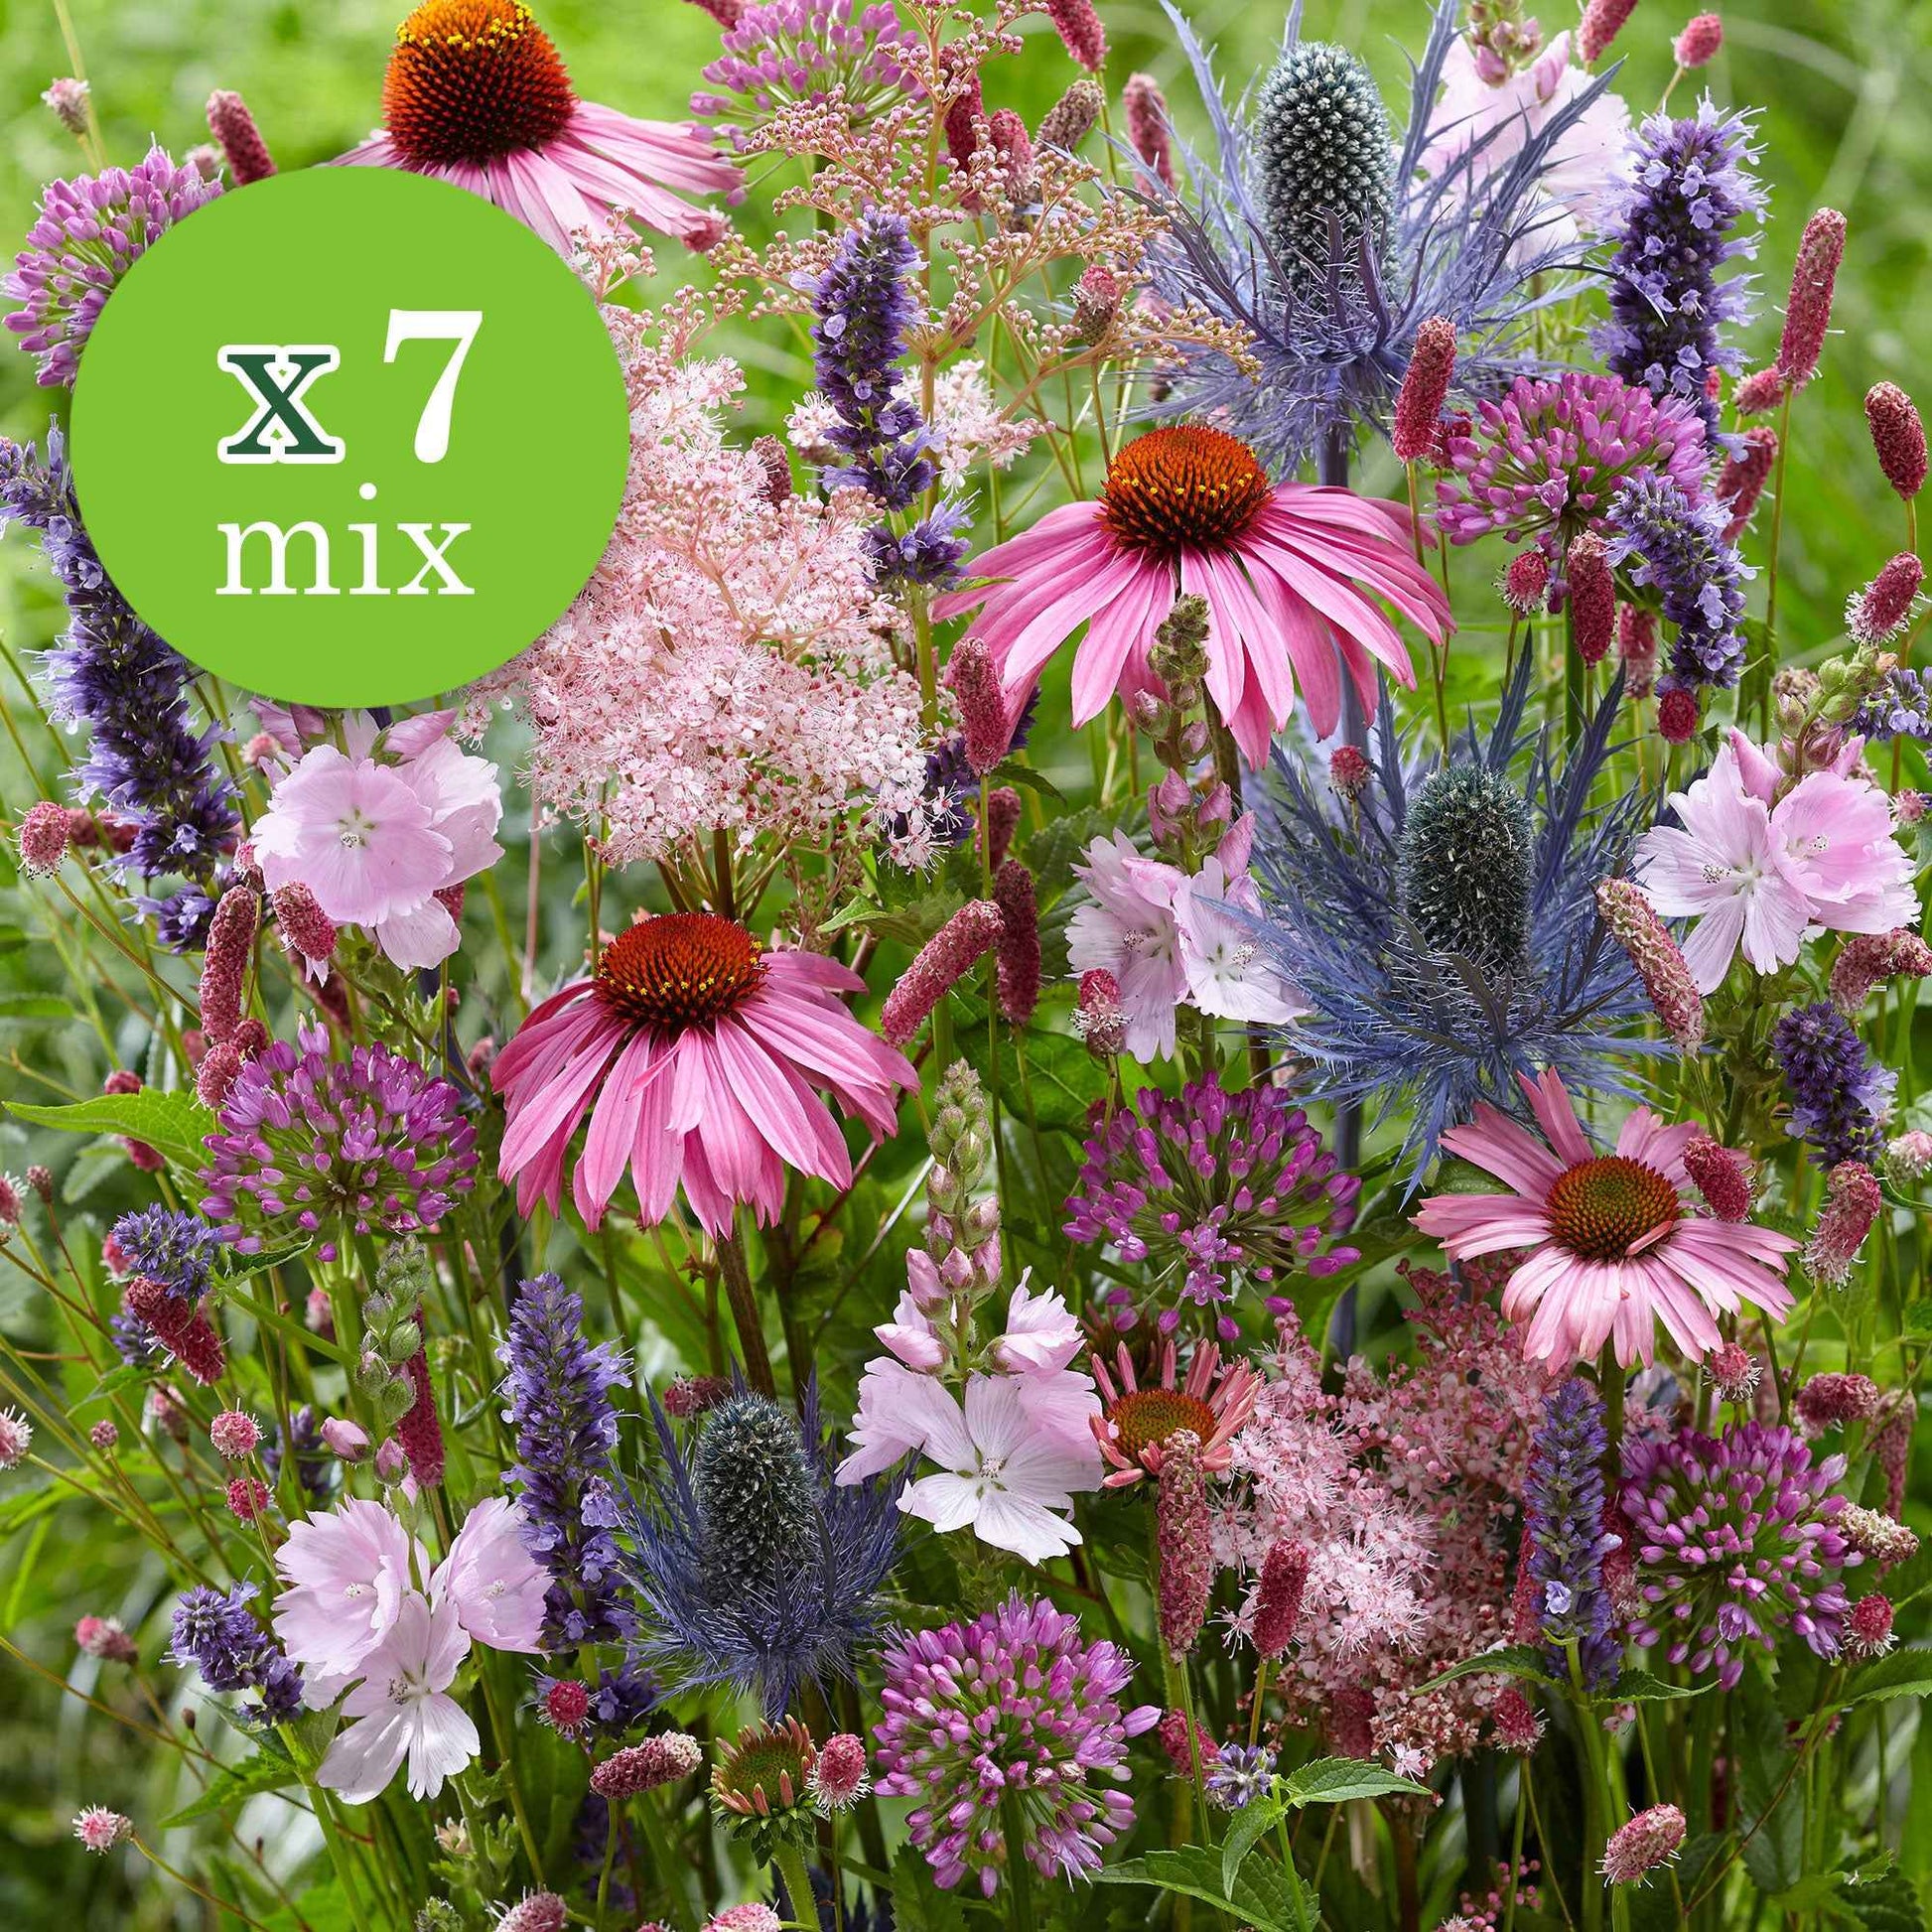 7x Vaste planten - Mix 'Colourful Butterflies' roze-paars-blauw - Bare rooted - Winterhard - Vaste planten